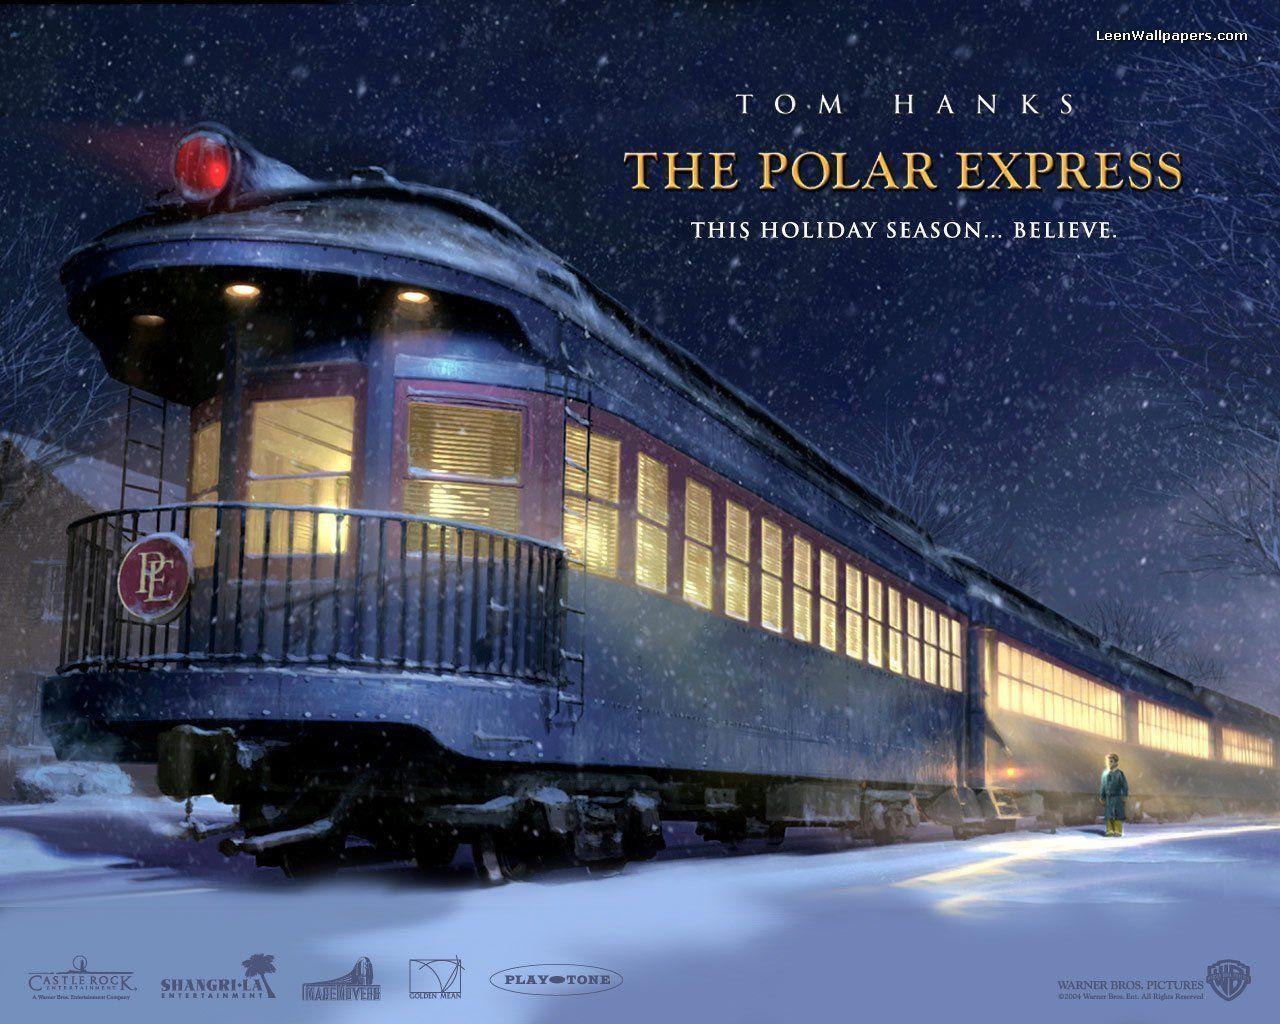 Polar Express Wallpaper. Daily inspiration art photo, picture